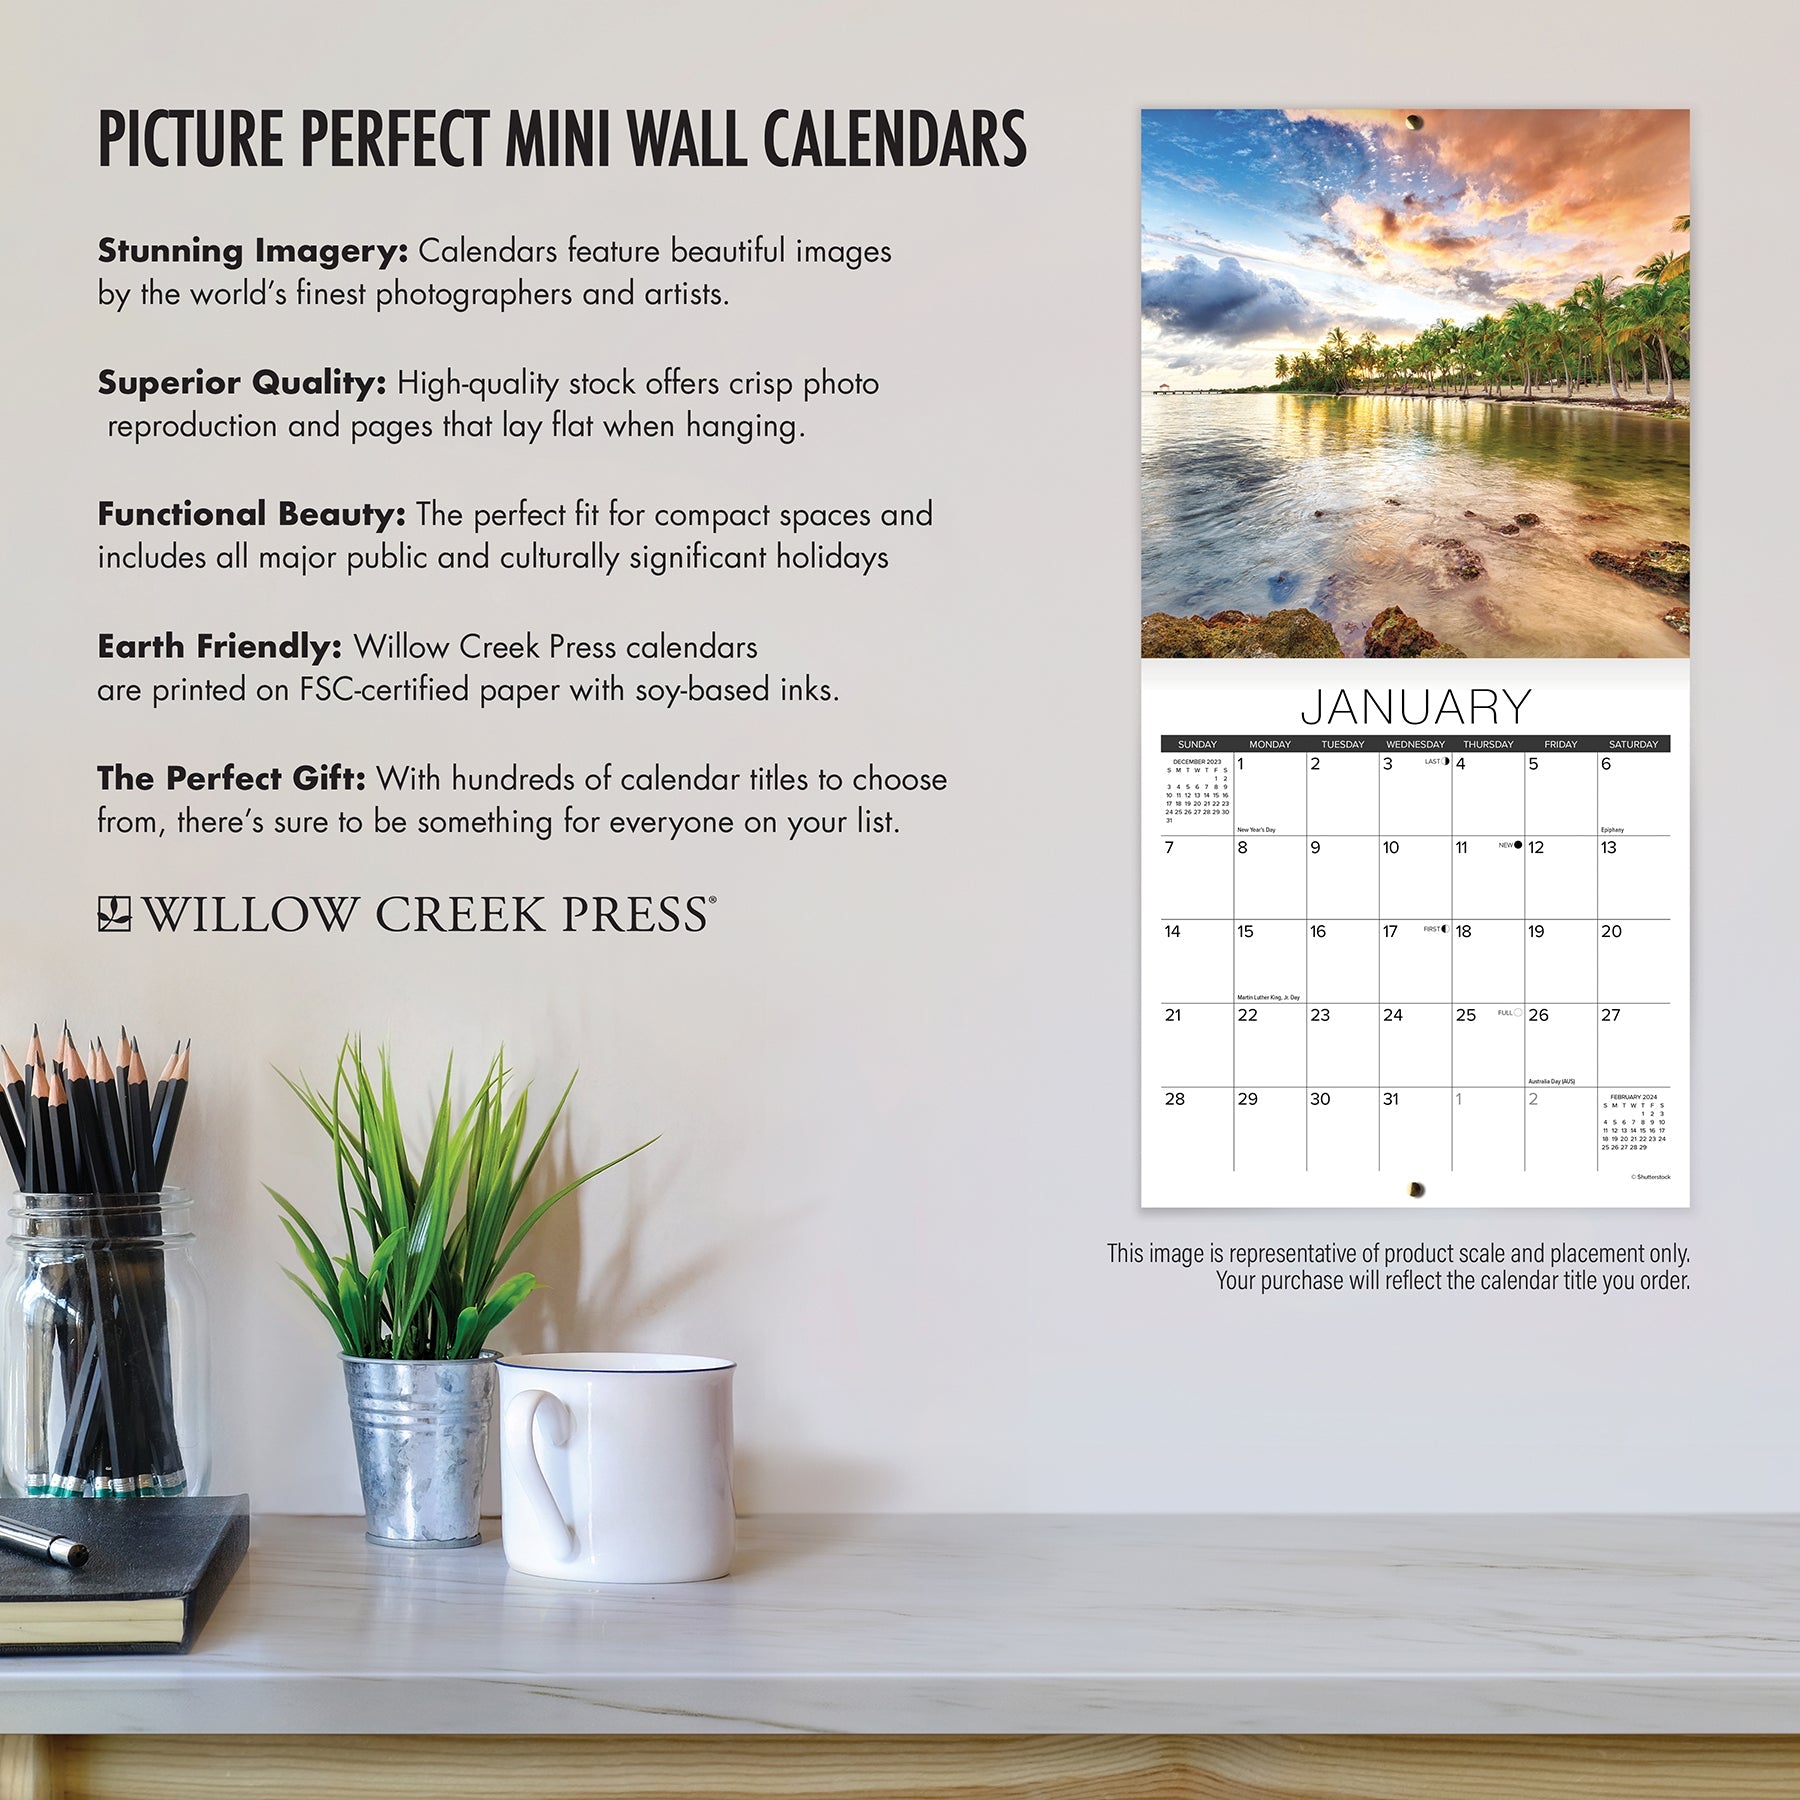 2024 Moms Planner - Mini Wall Calendar